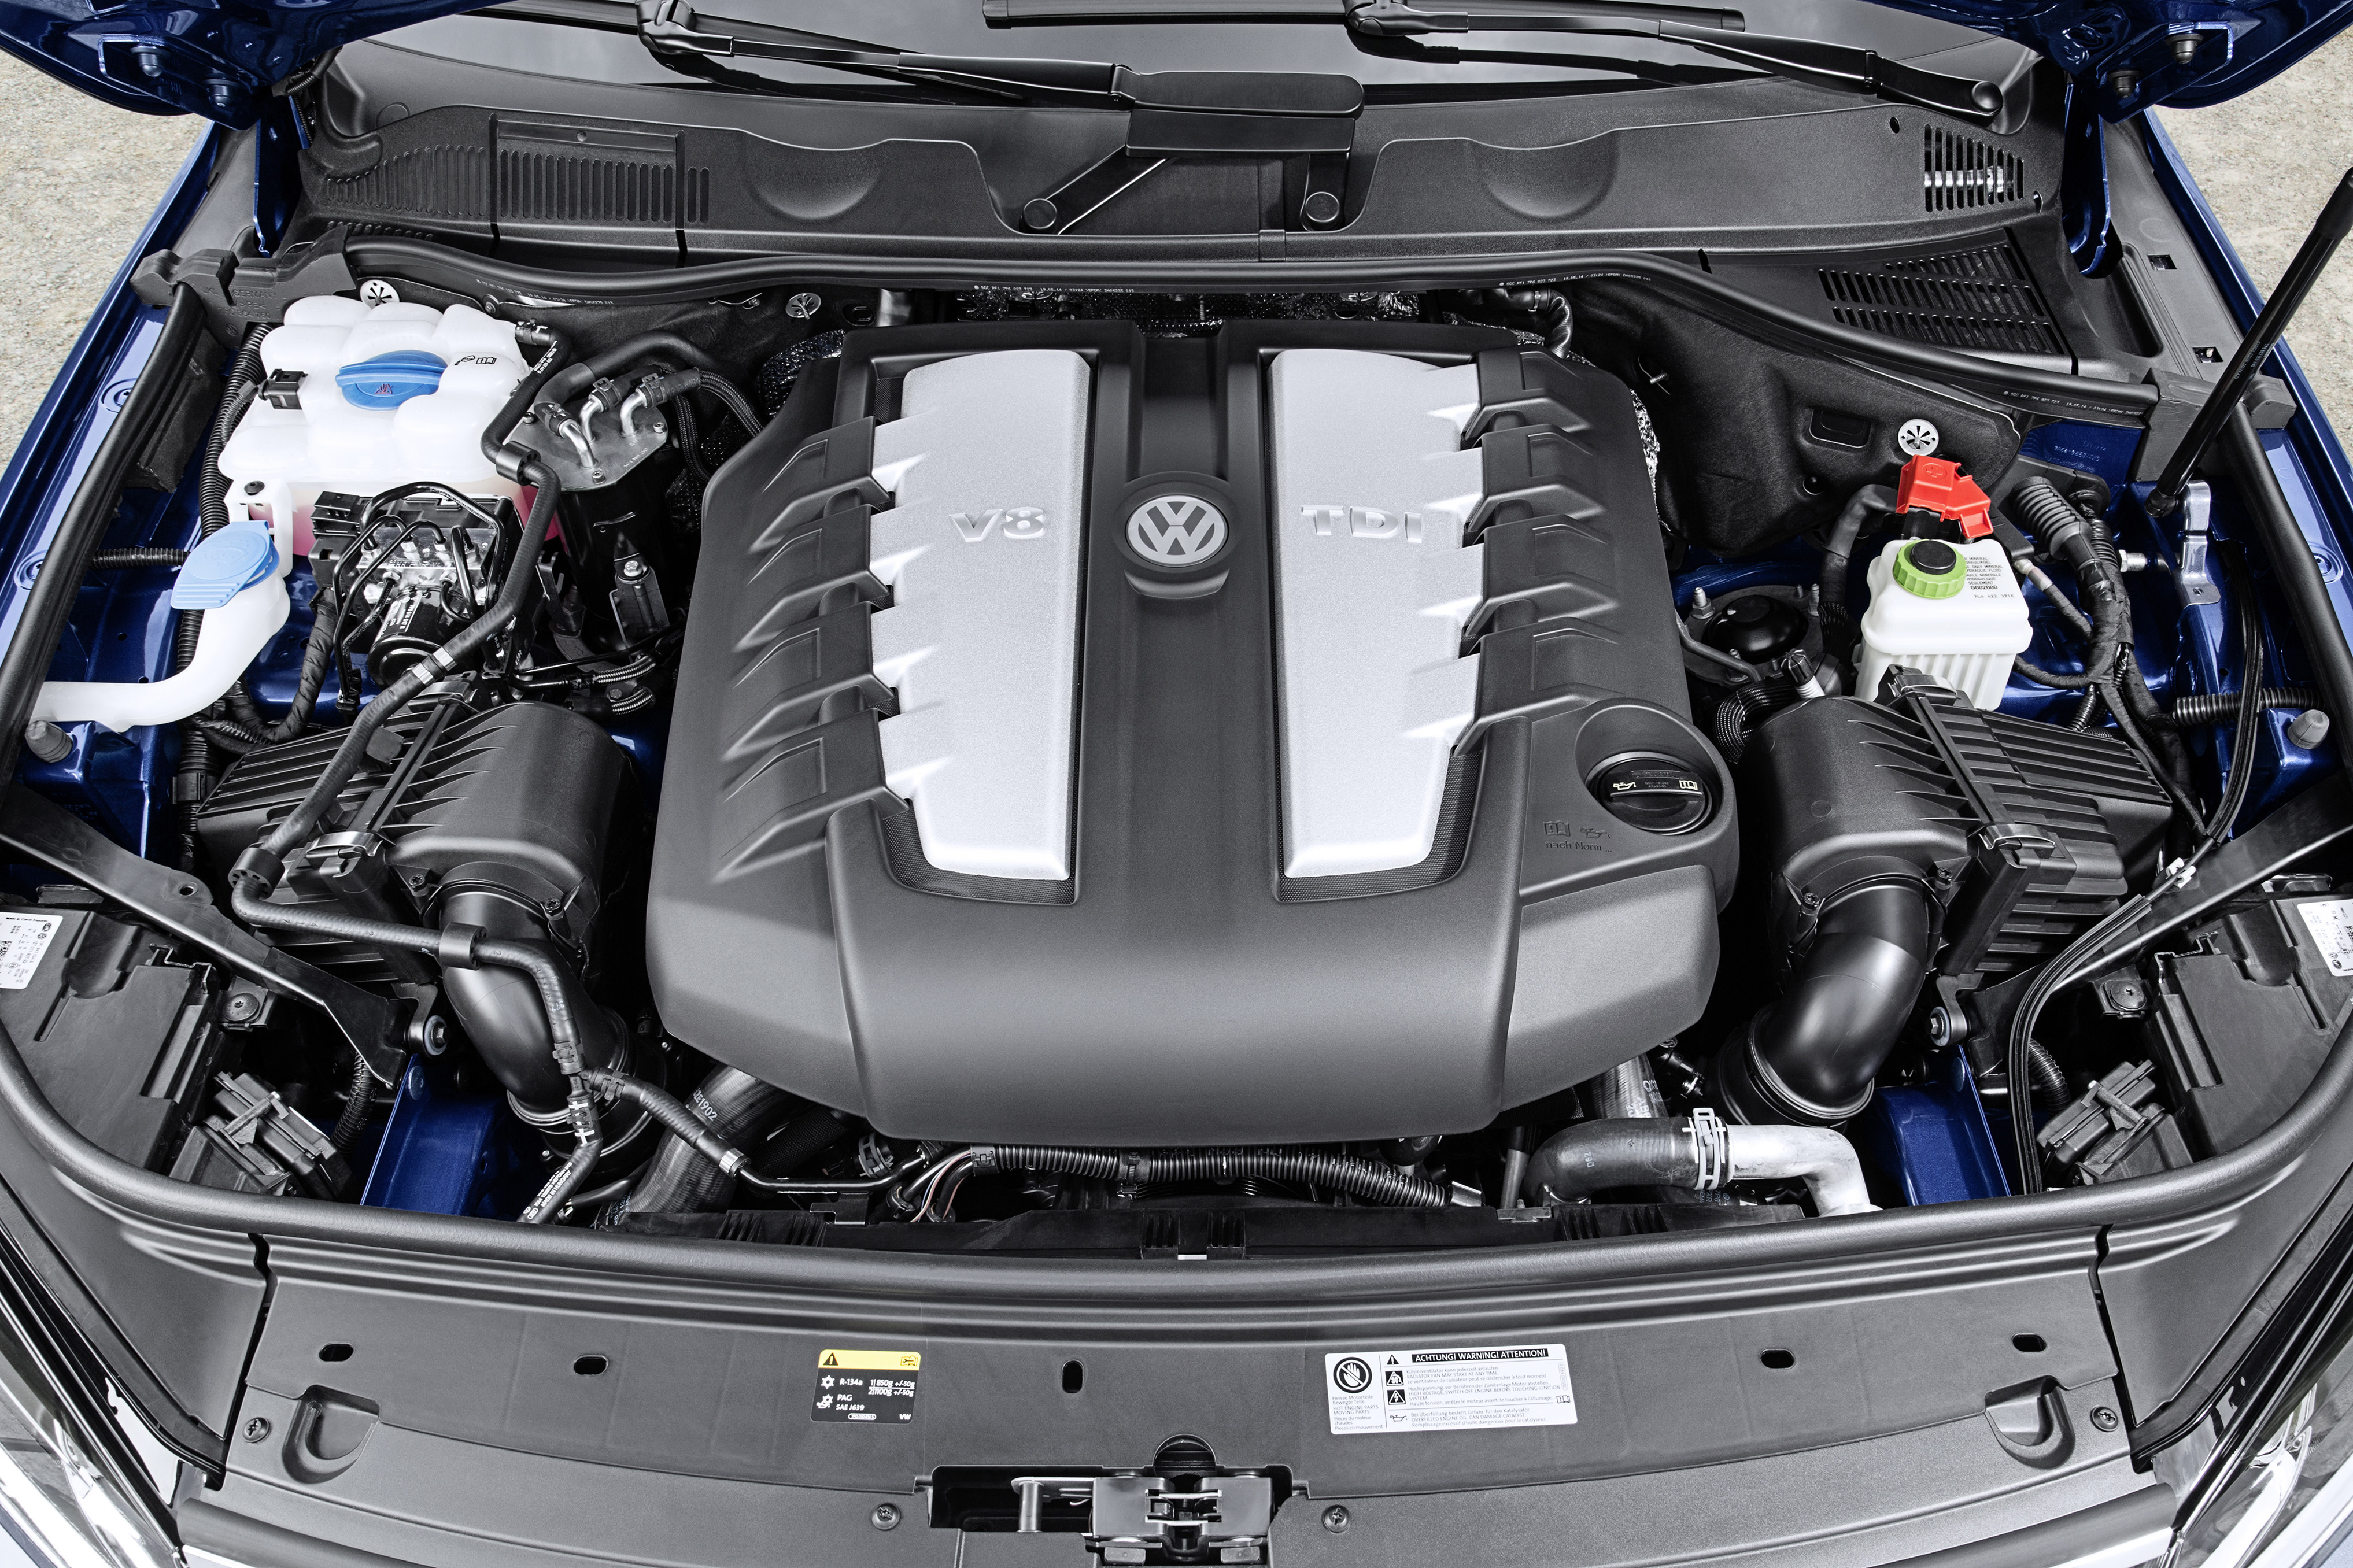 Volkswagen 3.0 tdi. Двигатель Volkswagen Touareg 4 и 2. Двигатель Фольксваген Туарег 3.0 дизель. Туарег 2014 под капотом. Фольксваген Туарег под капотом.